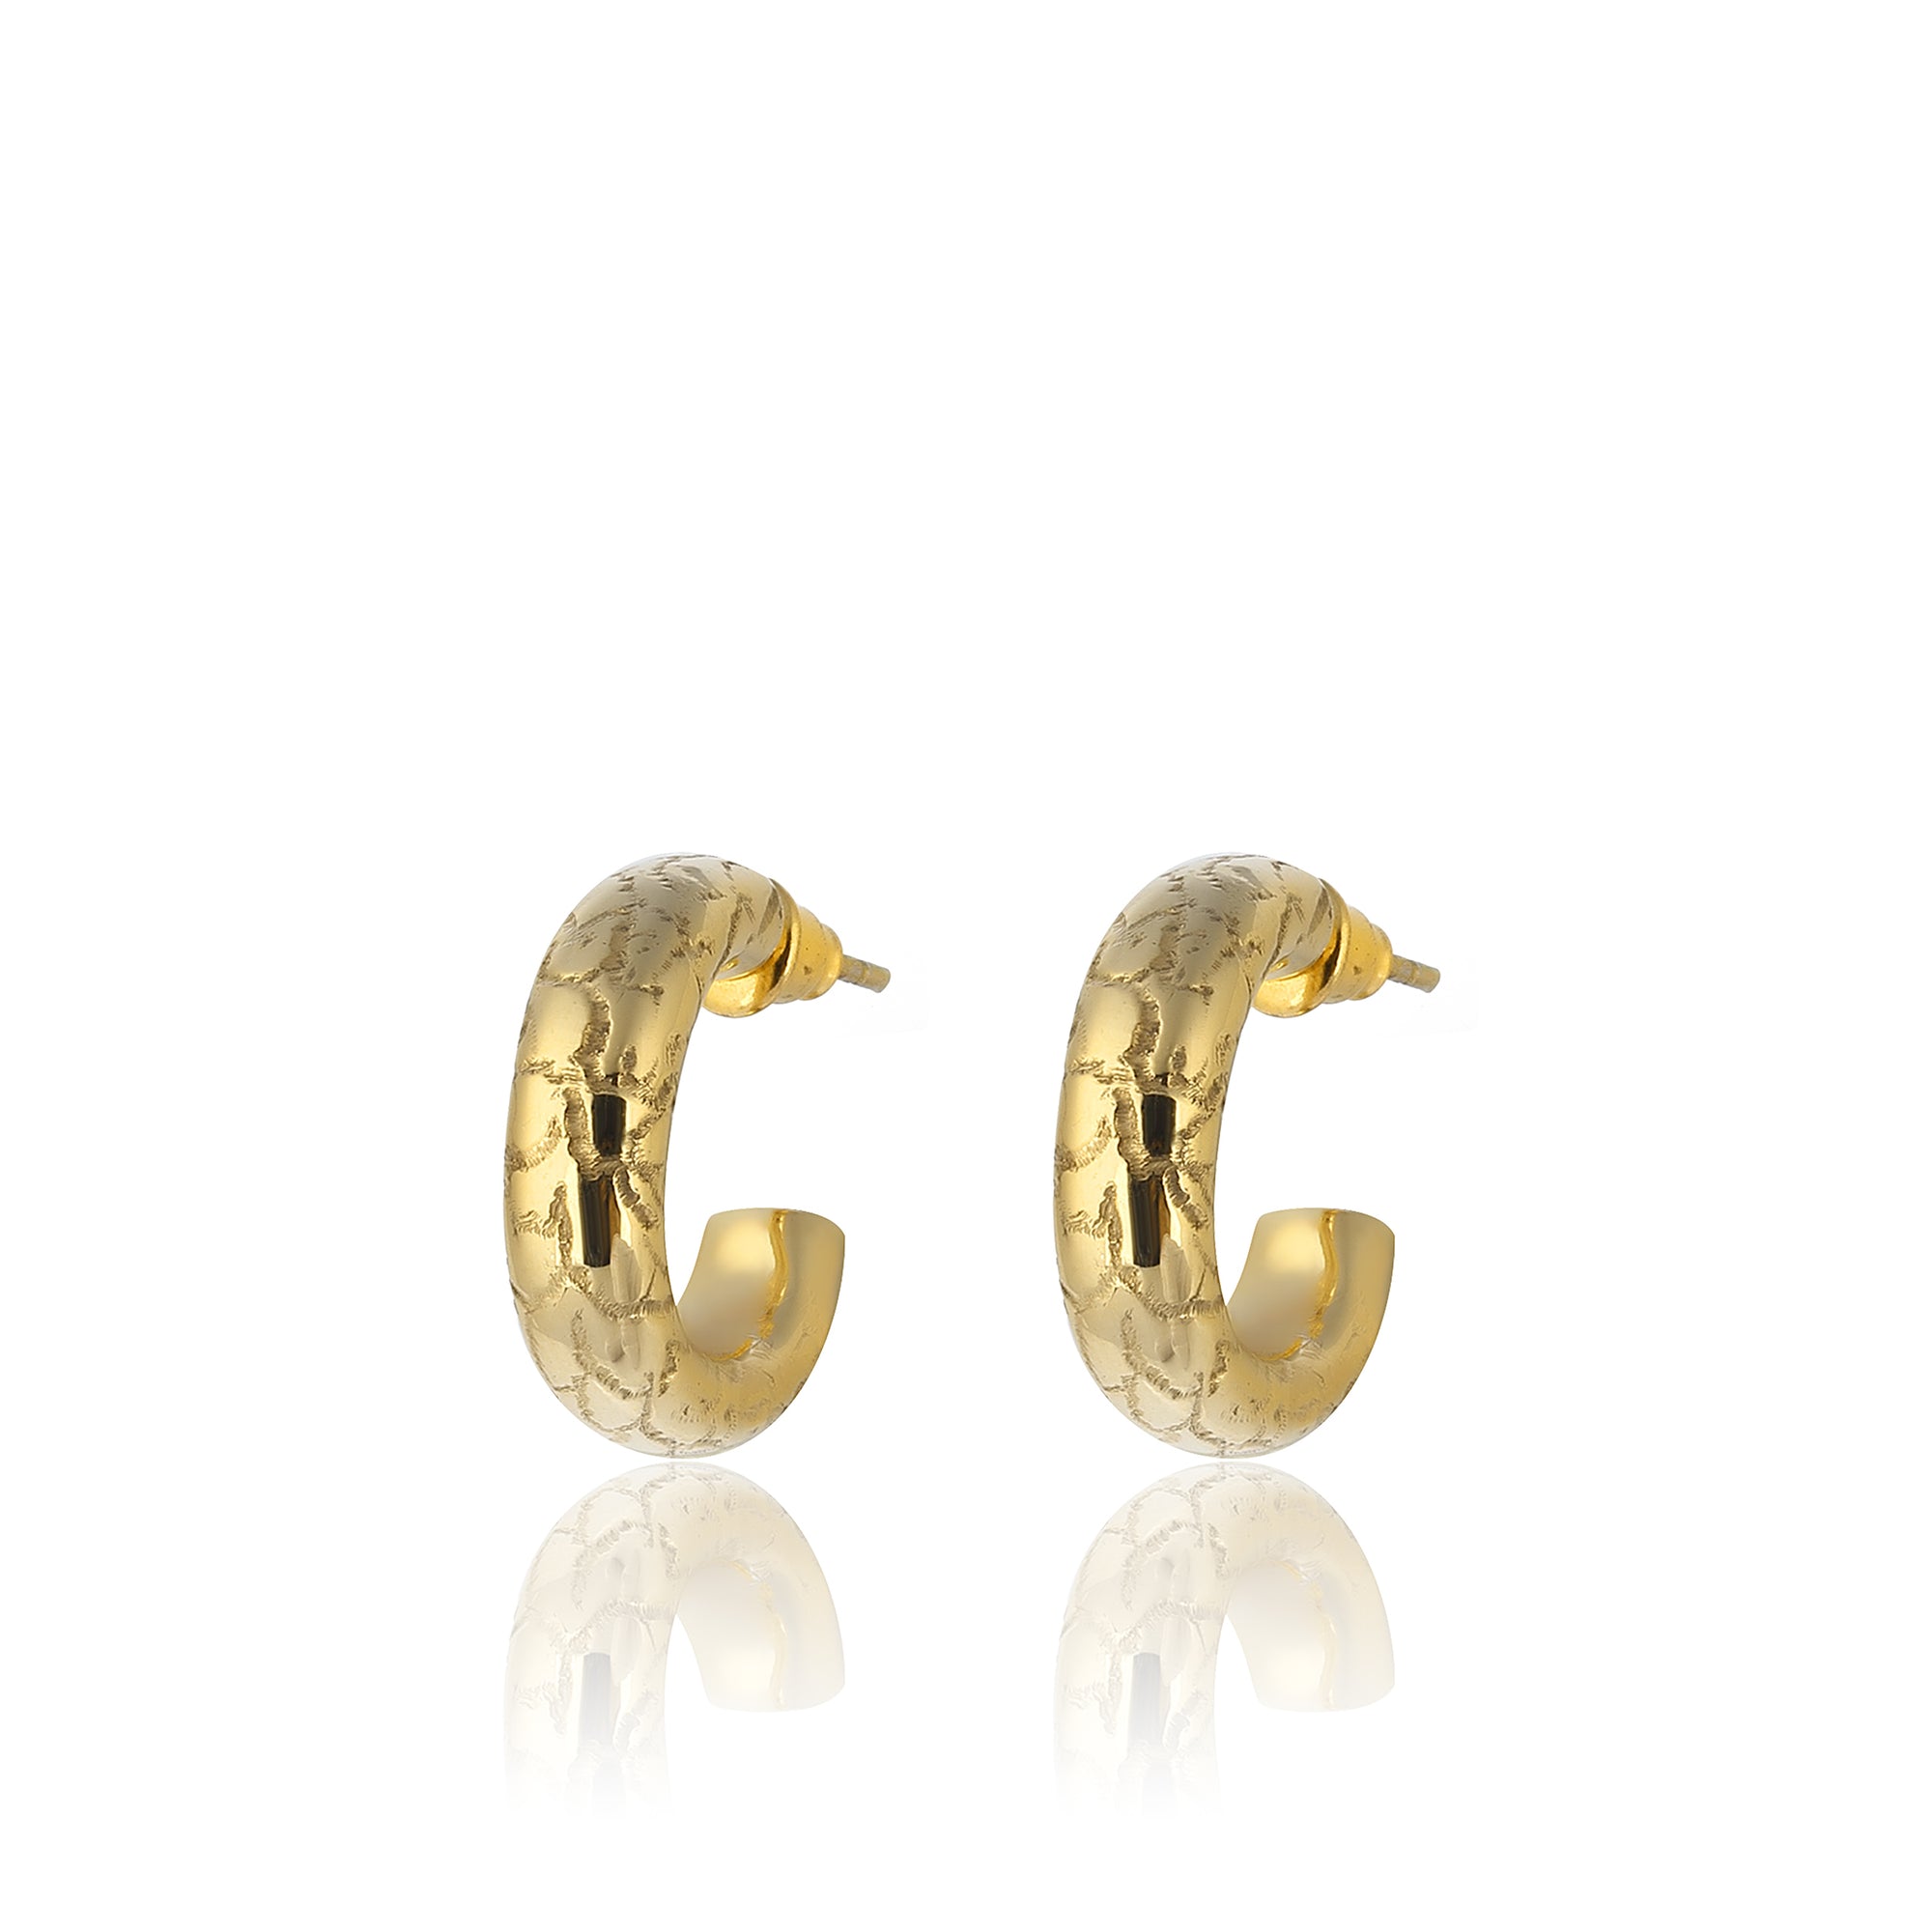 24K Gold plated hoop earrings costume jewelry mini hoops